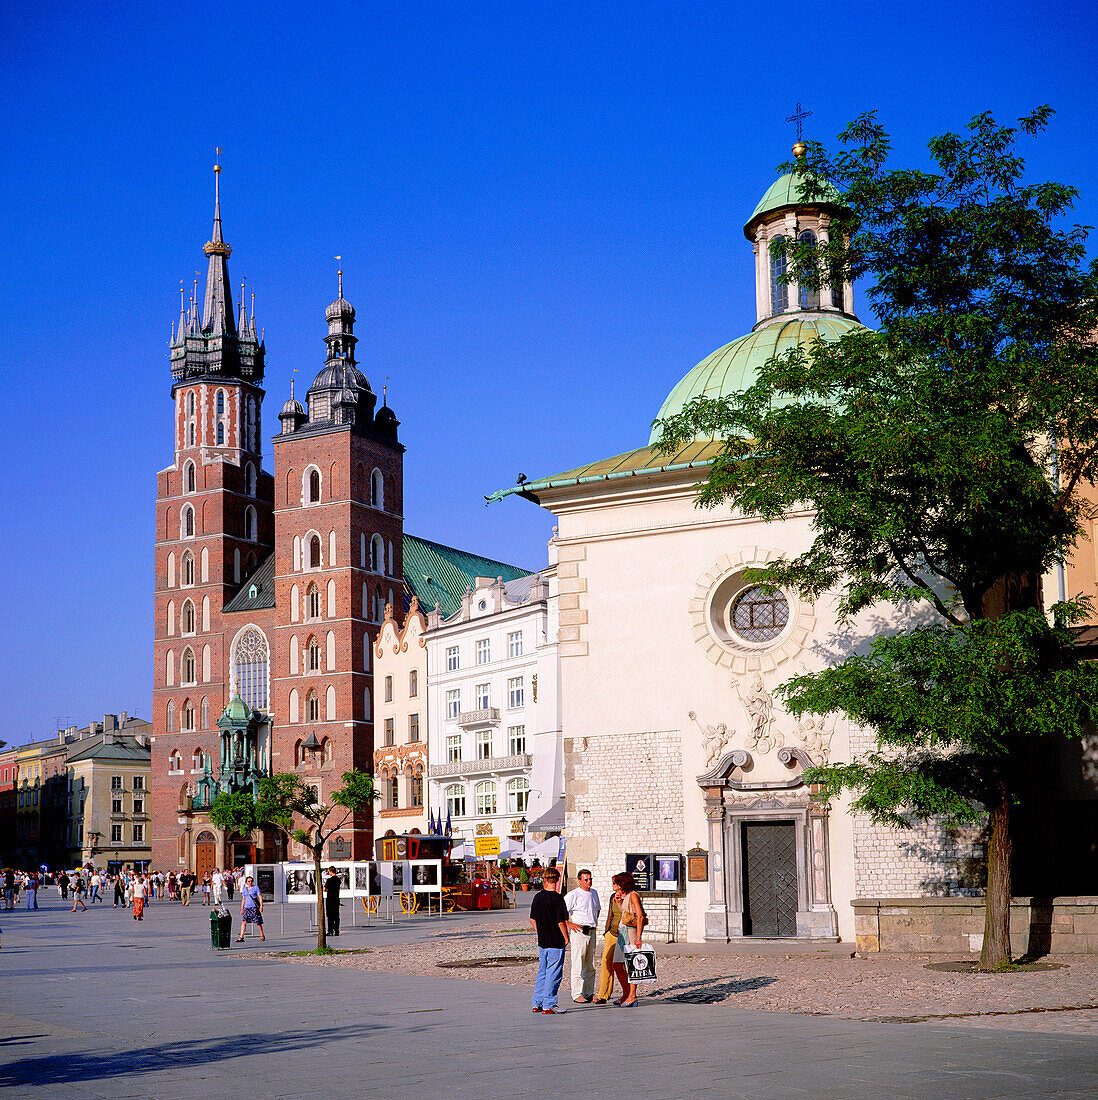 CHURCHES IN MAIN SQUARE, RYNEK GLOWNY, KRAKOW, POLAND